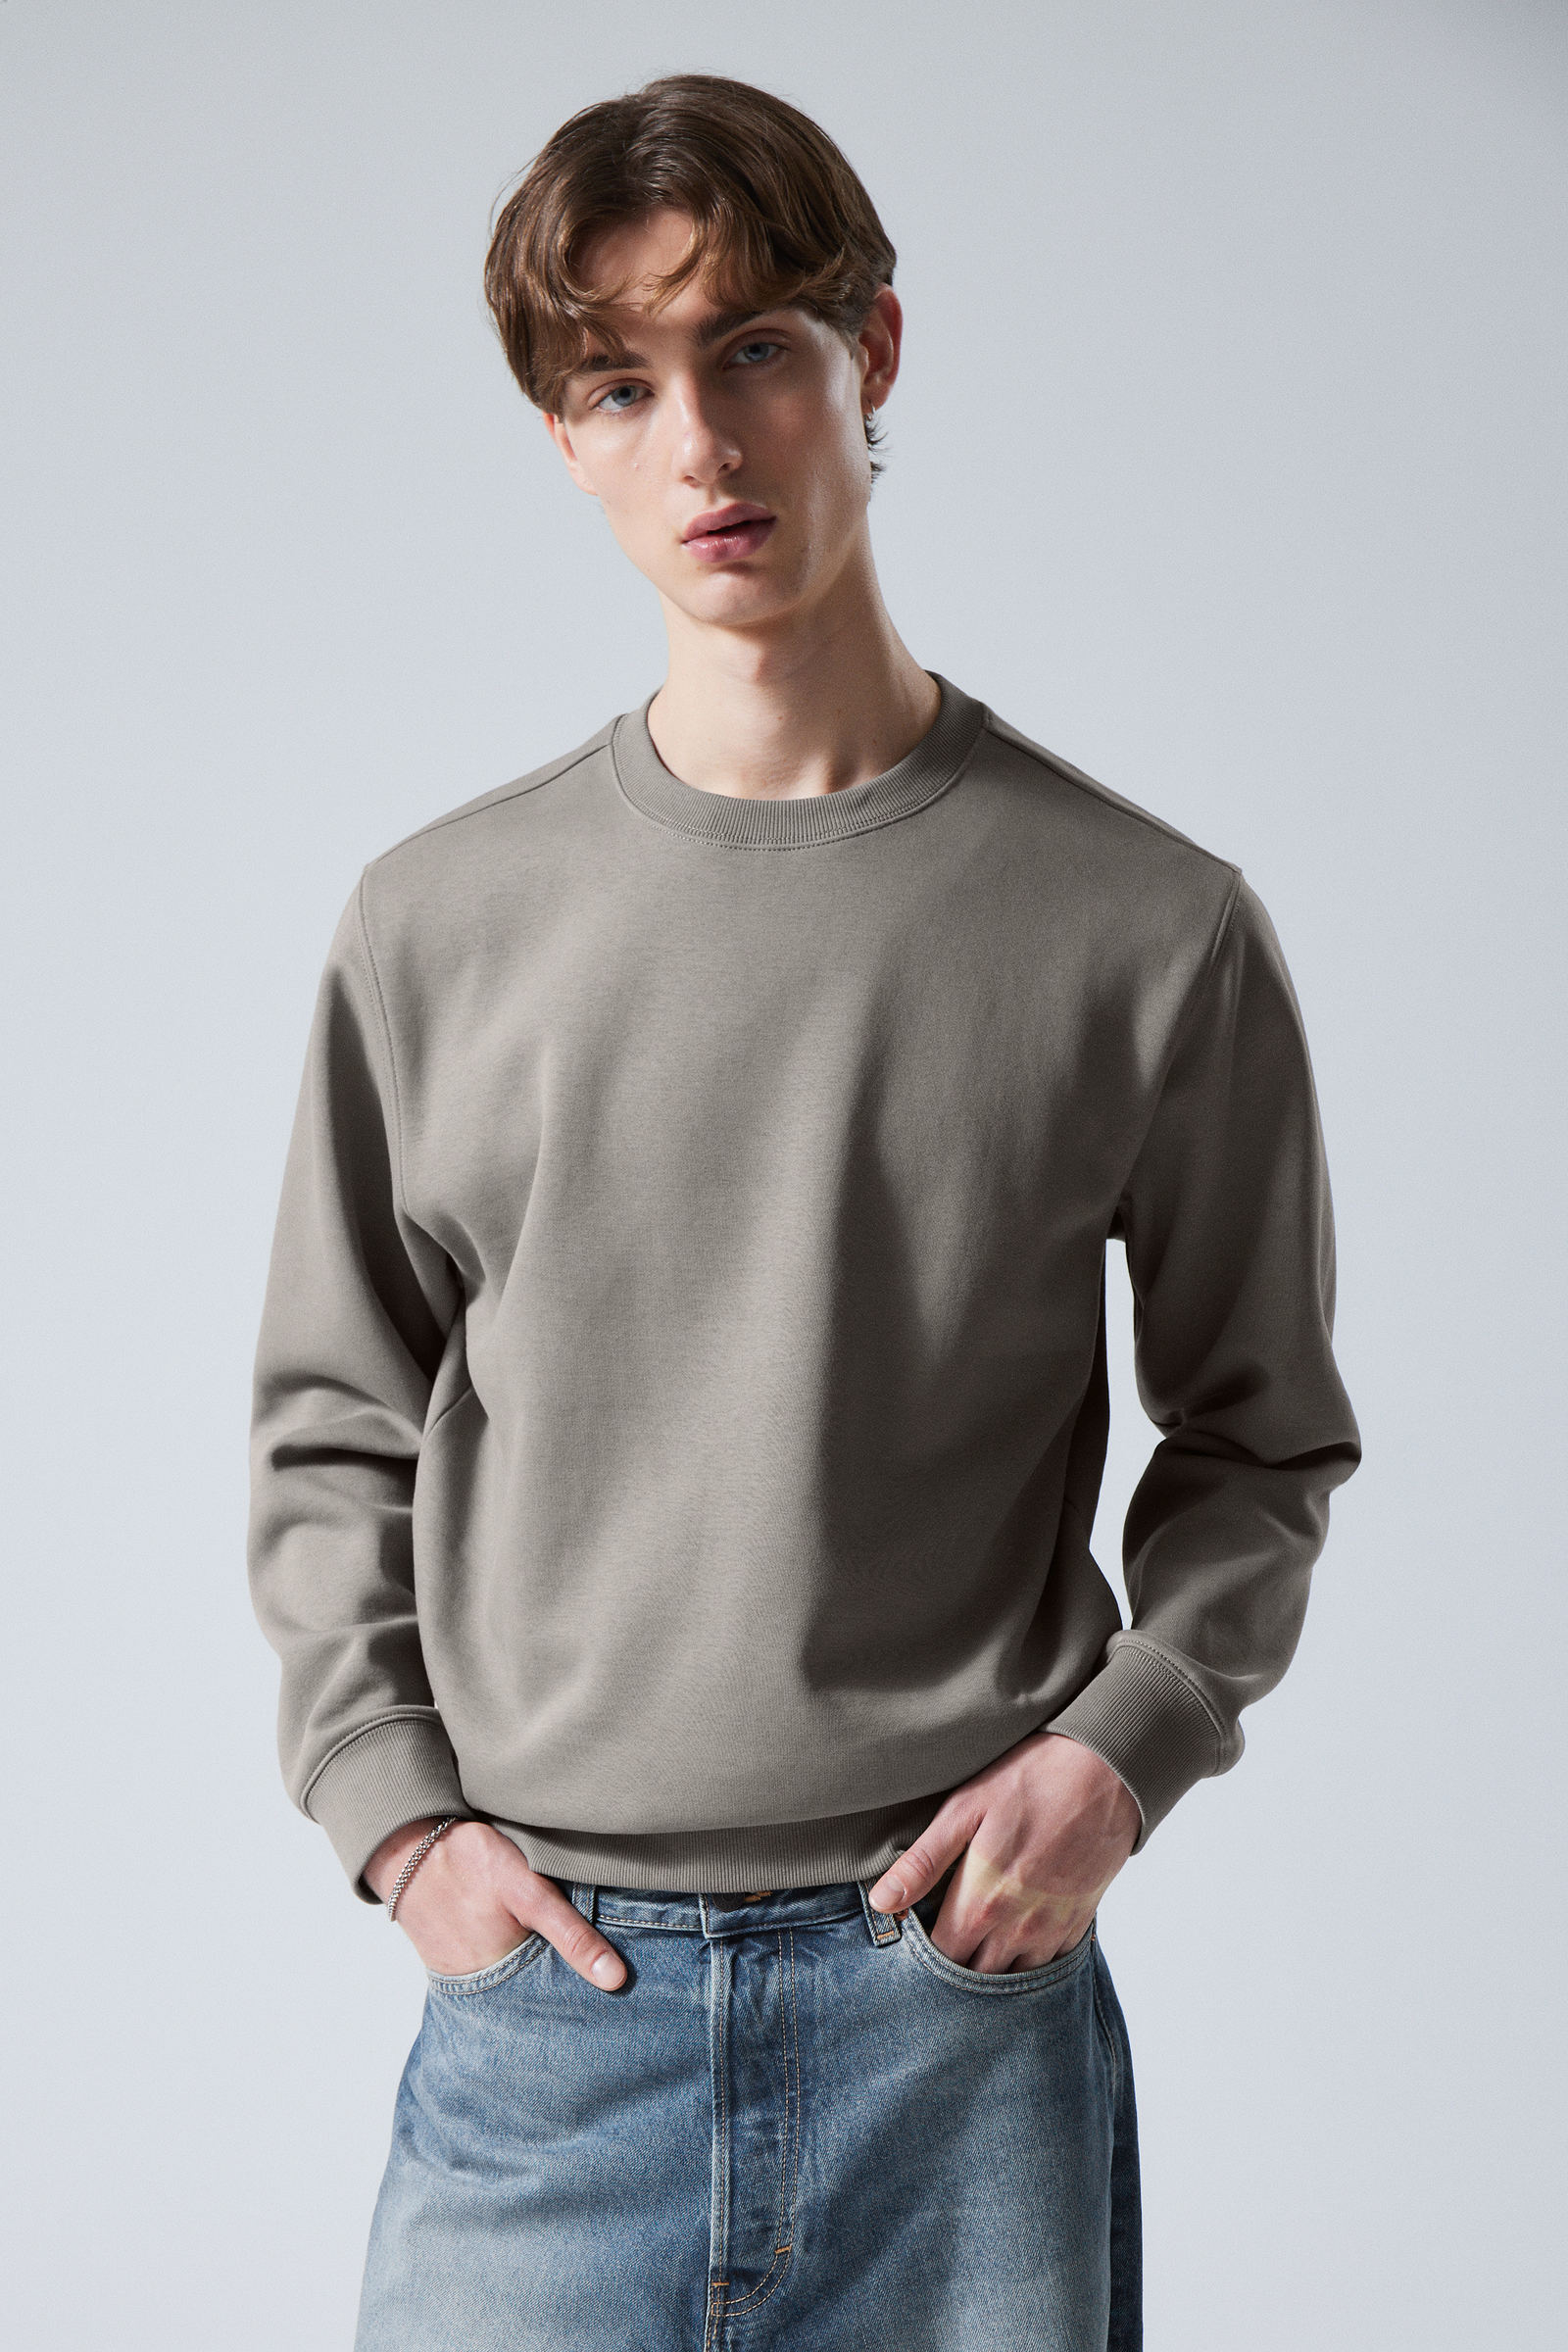 #787675 - Standard Midweight Sweatshirt - 1